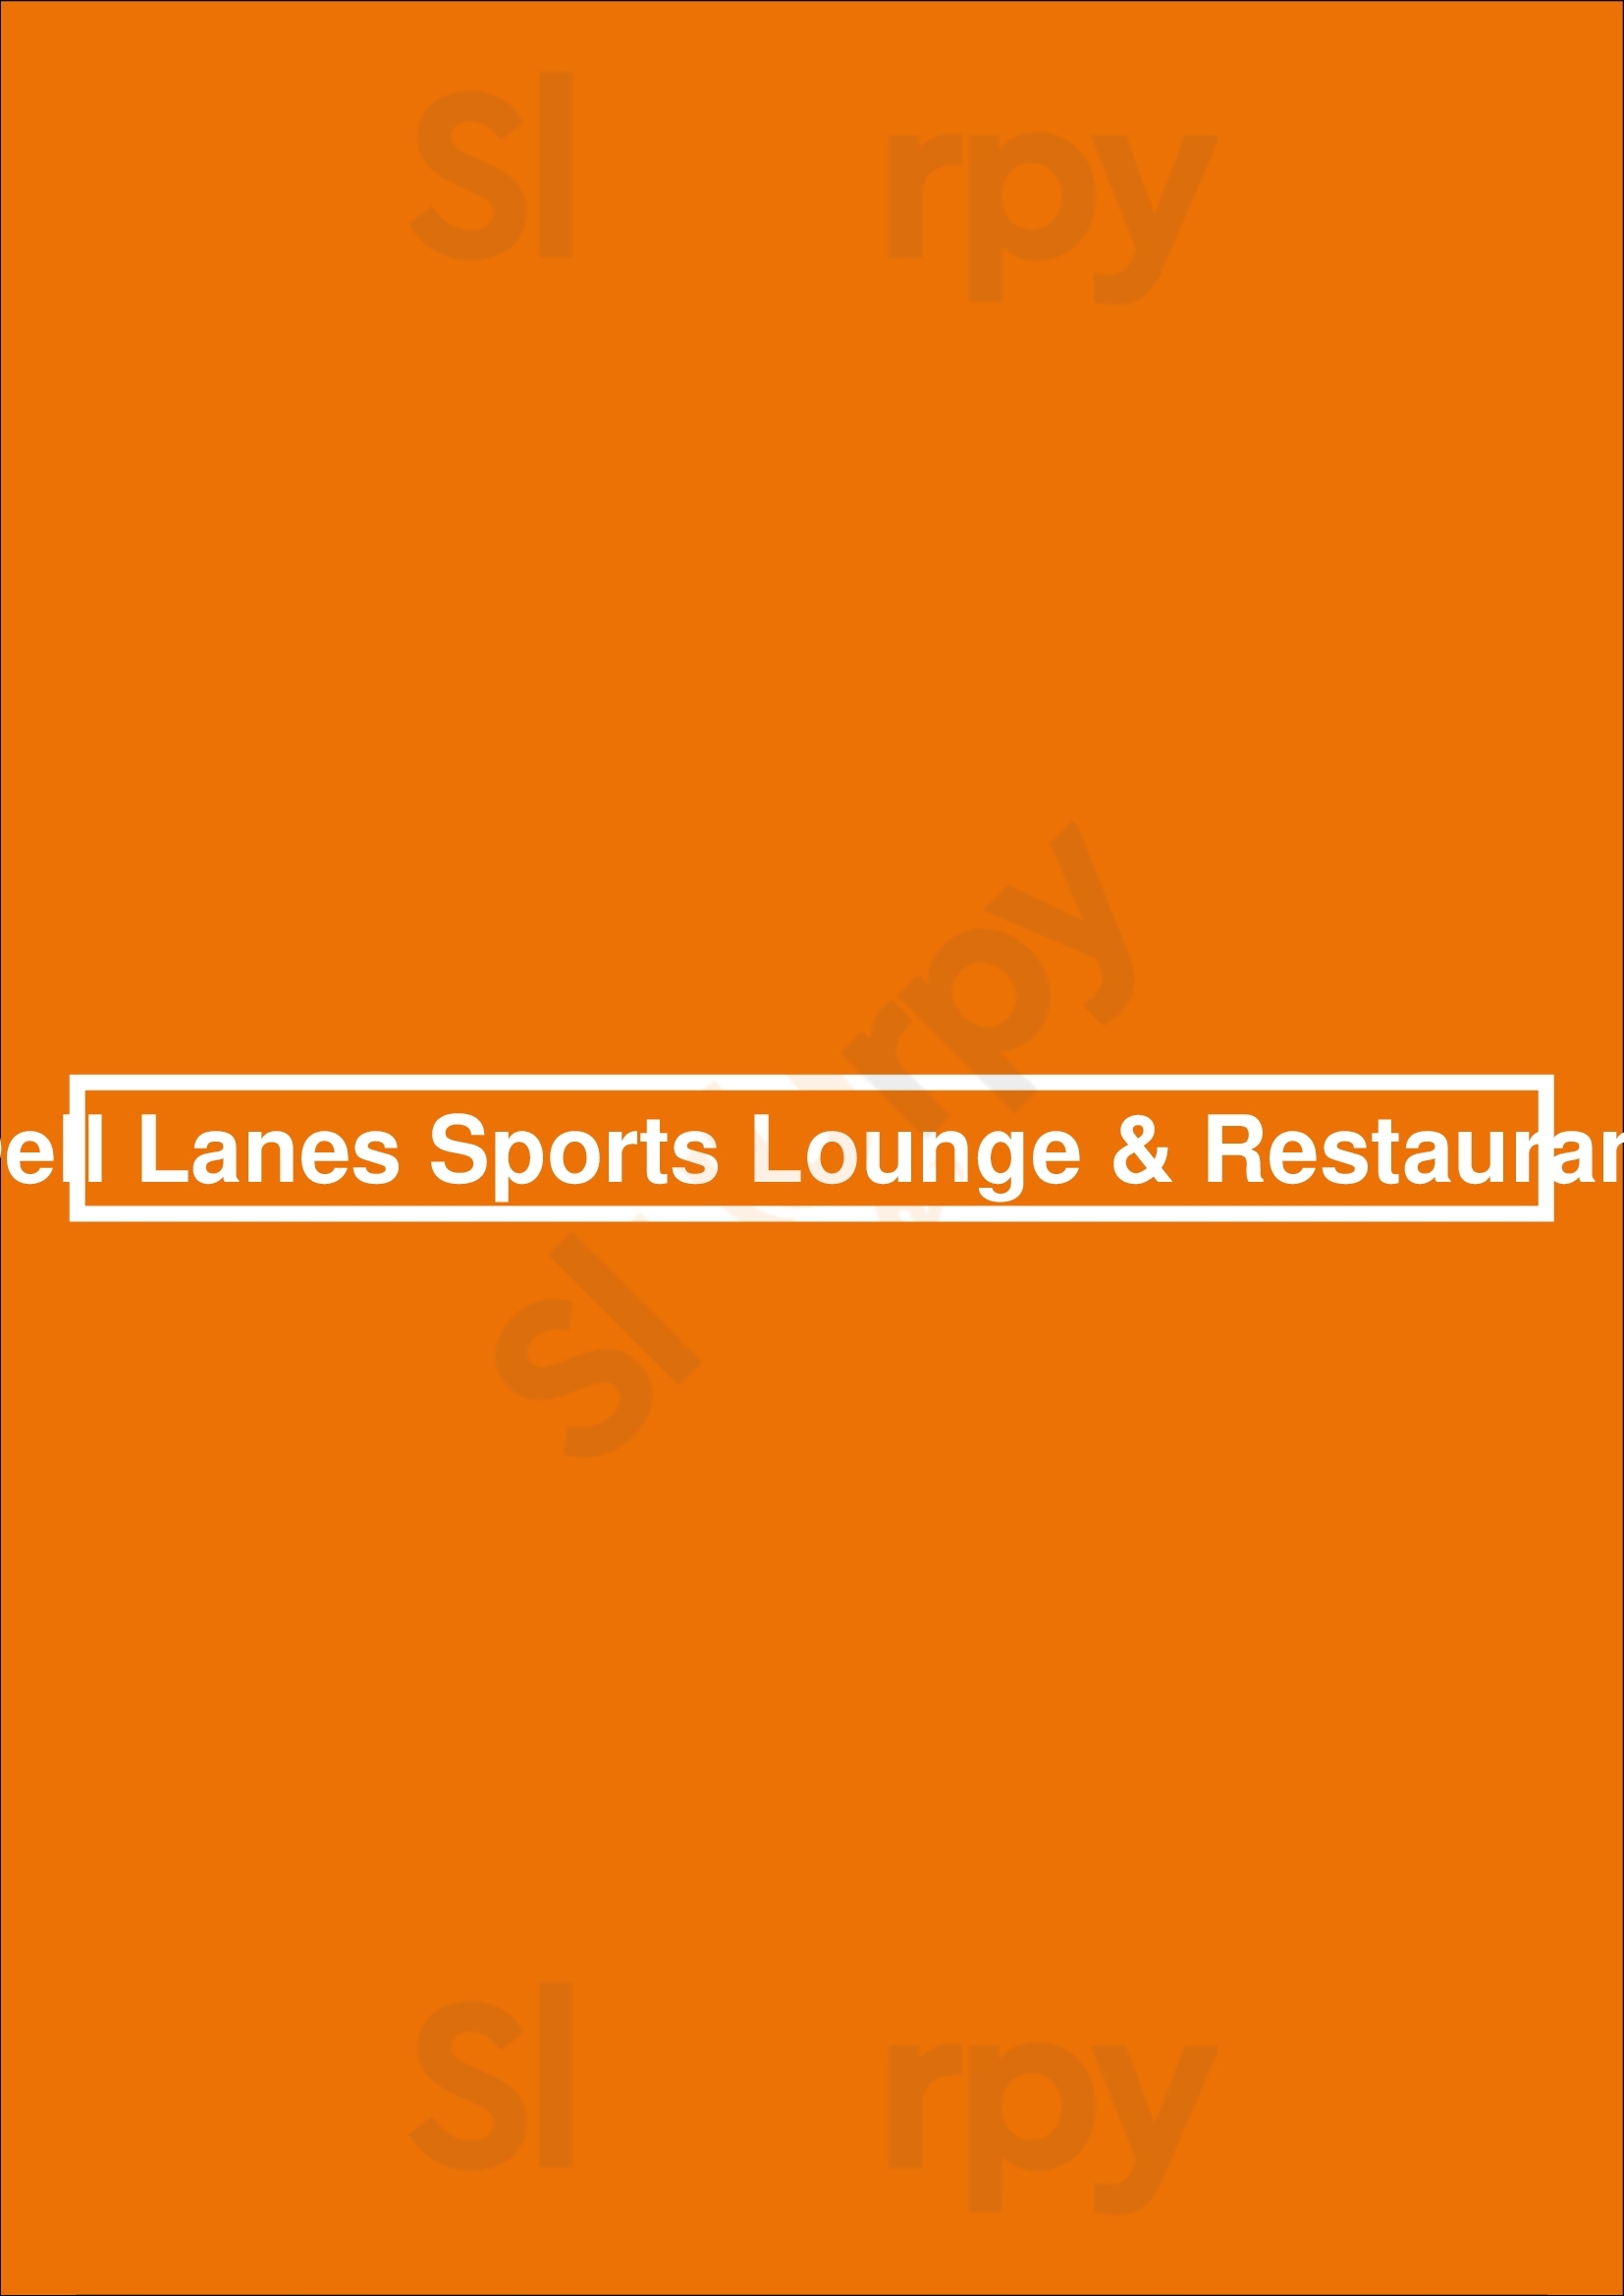 Dell Lanes Sports Lounge & Restaurant Surrey Menu - 1